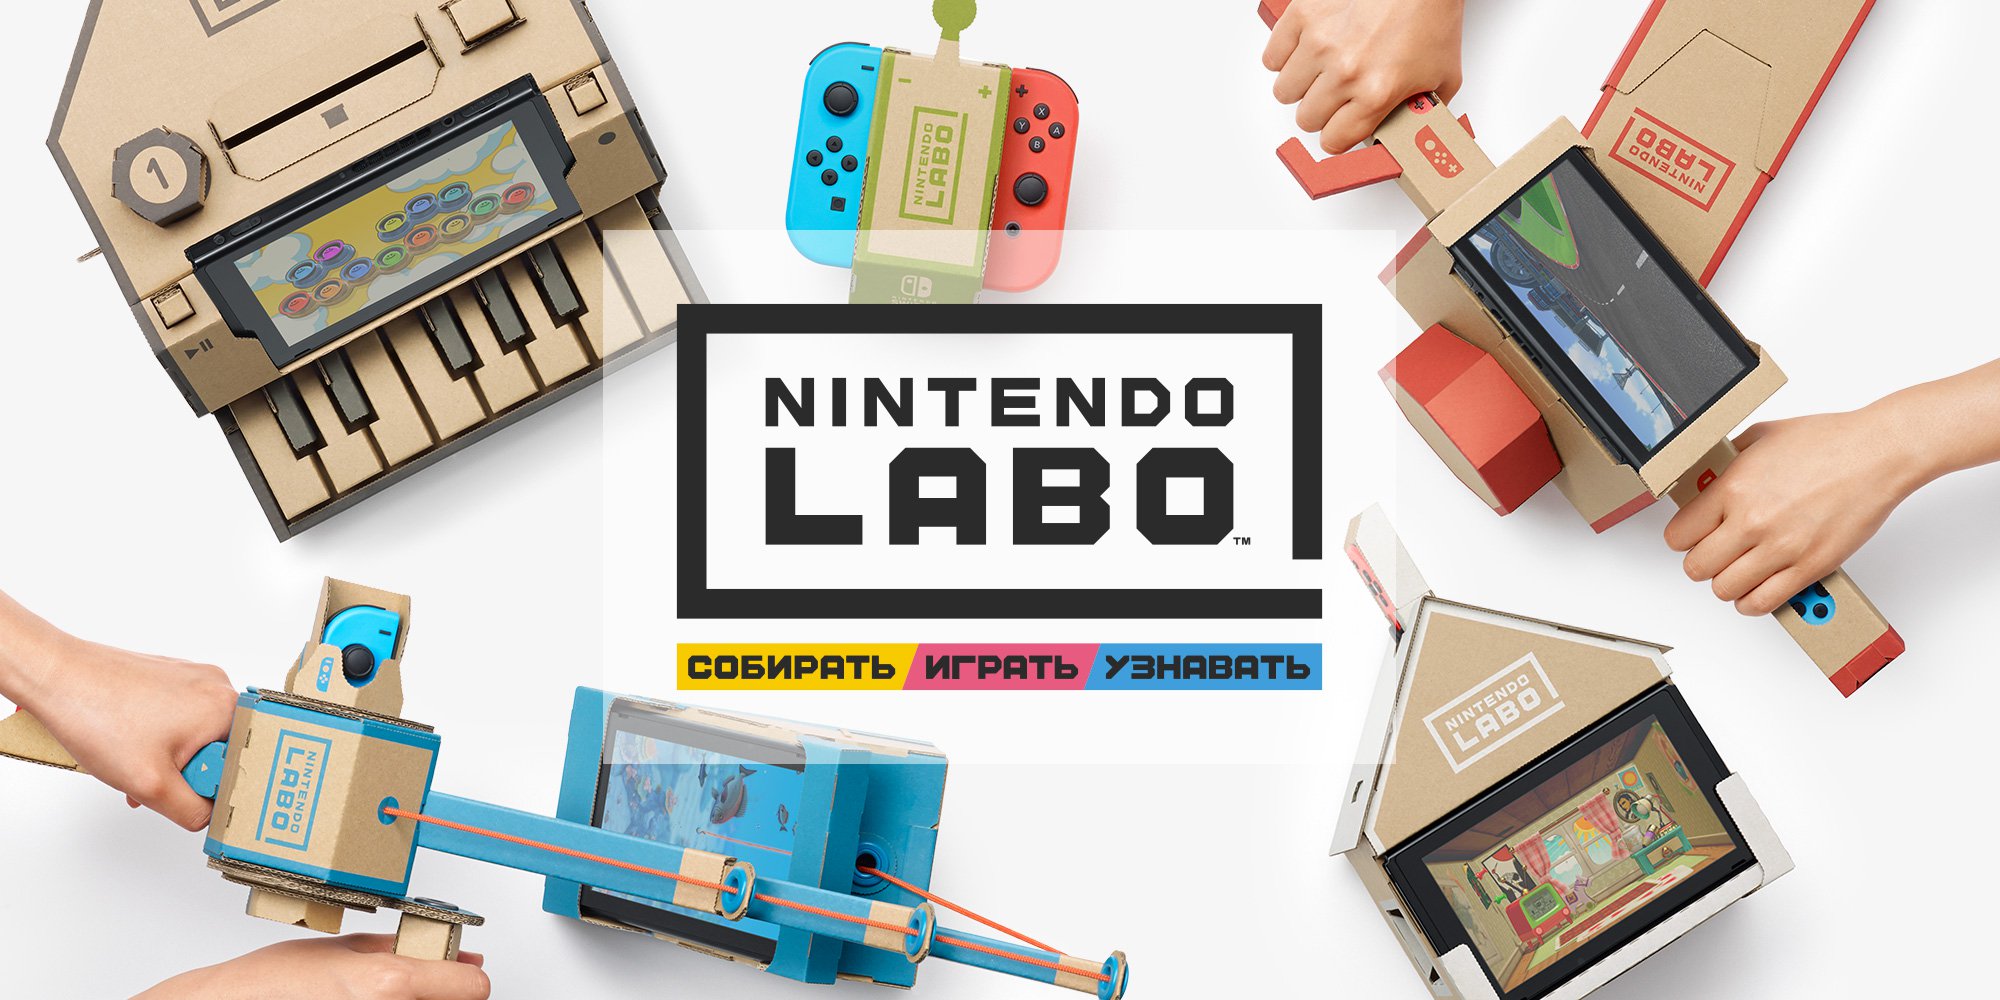 #Video | DIY: interaktive Designer Nintendo Labo